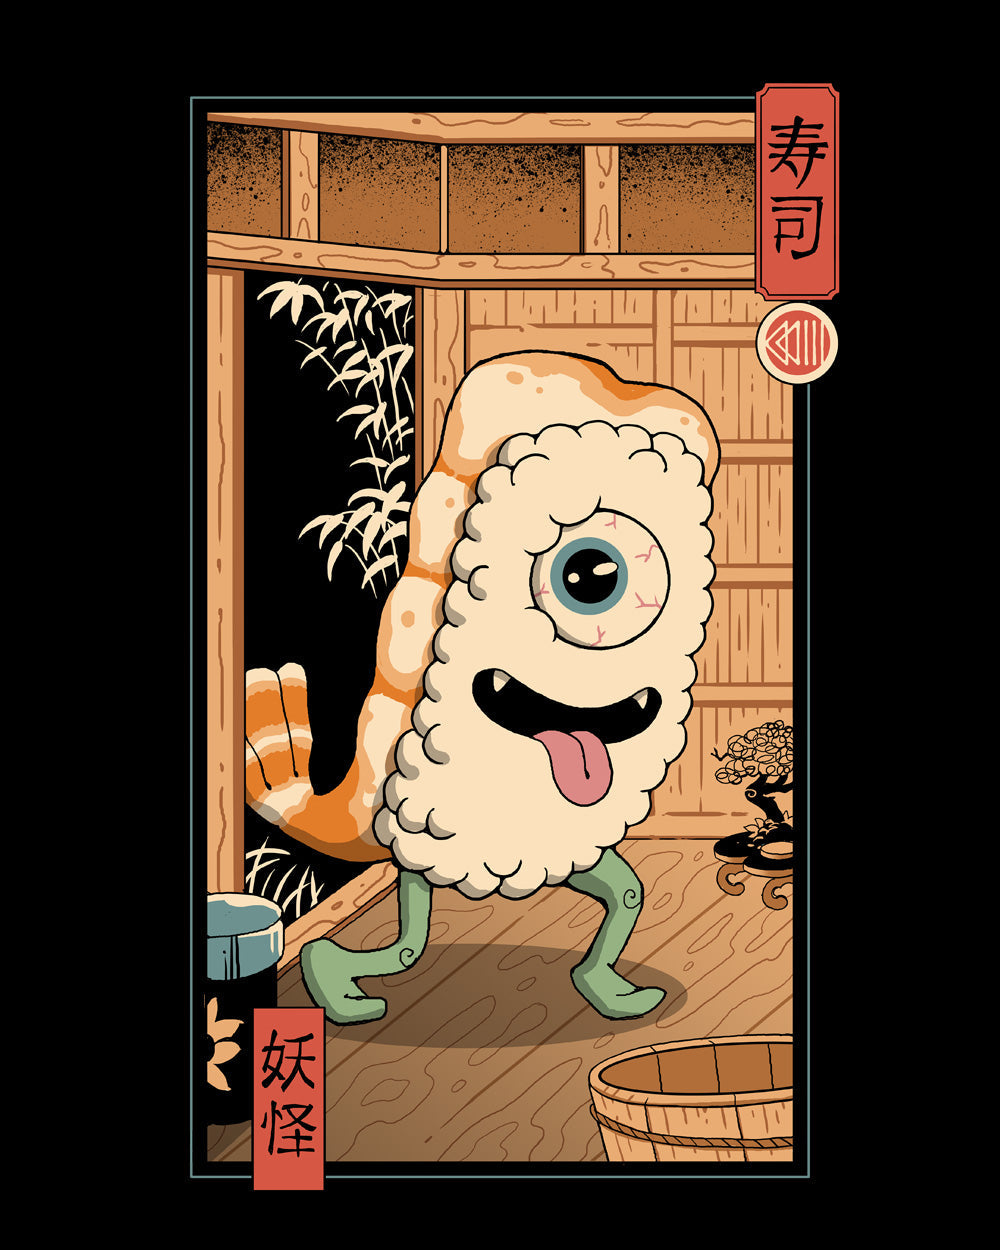 Yokai Sushi in Edo Japanese Japan Inspired Artsy Prawn Nori Foodie Kaiju Influenced Cotton T-Shirt